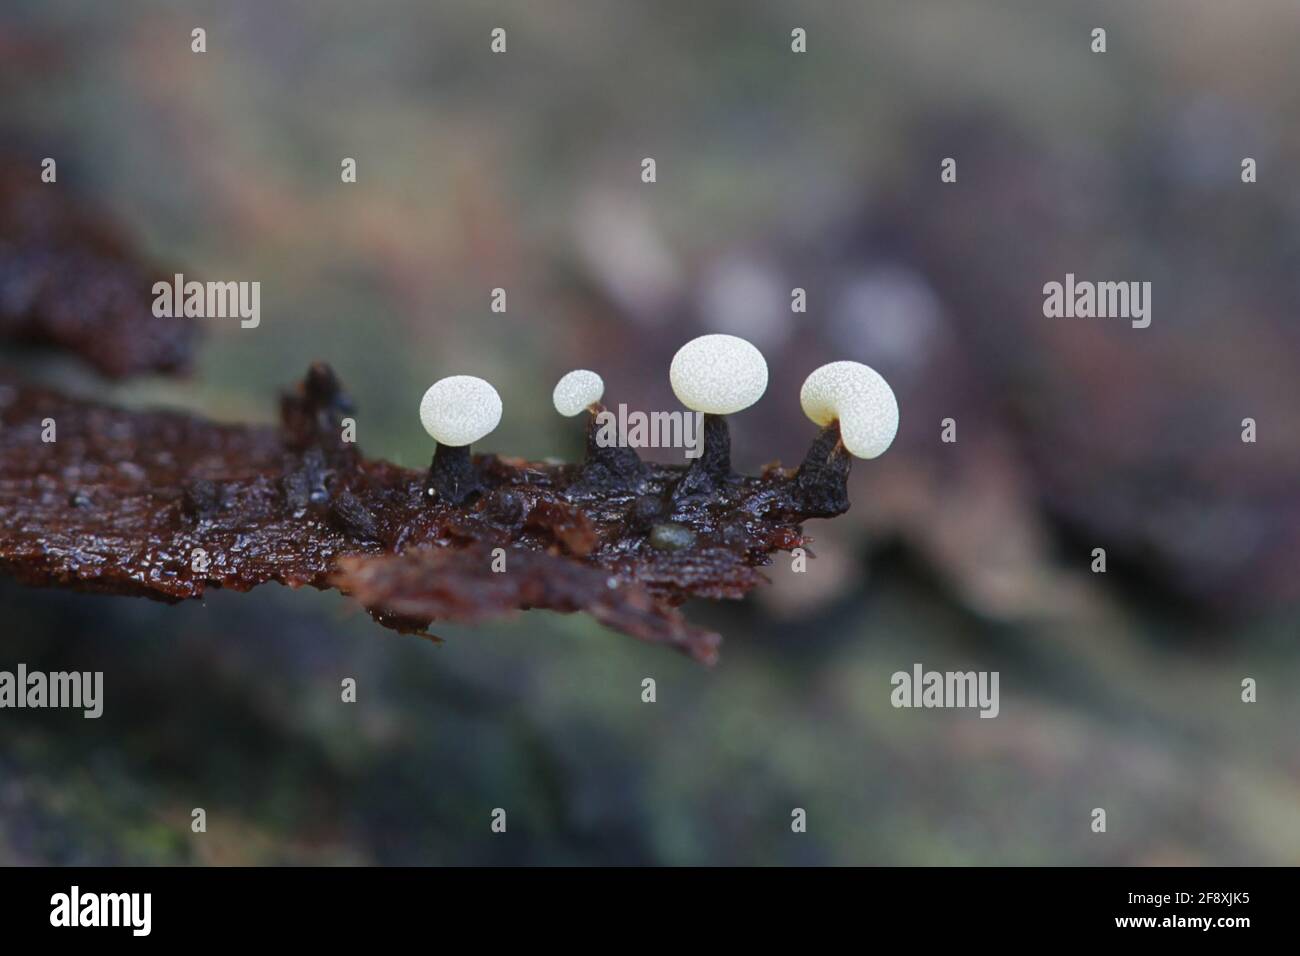 Didymium melanospermum, a slime mold growing on sphagnum moss in Finland Stock Photo